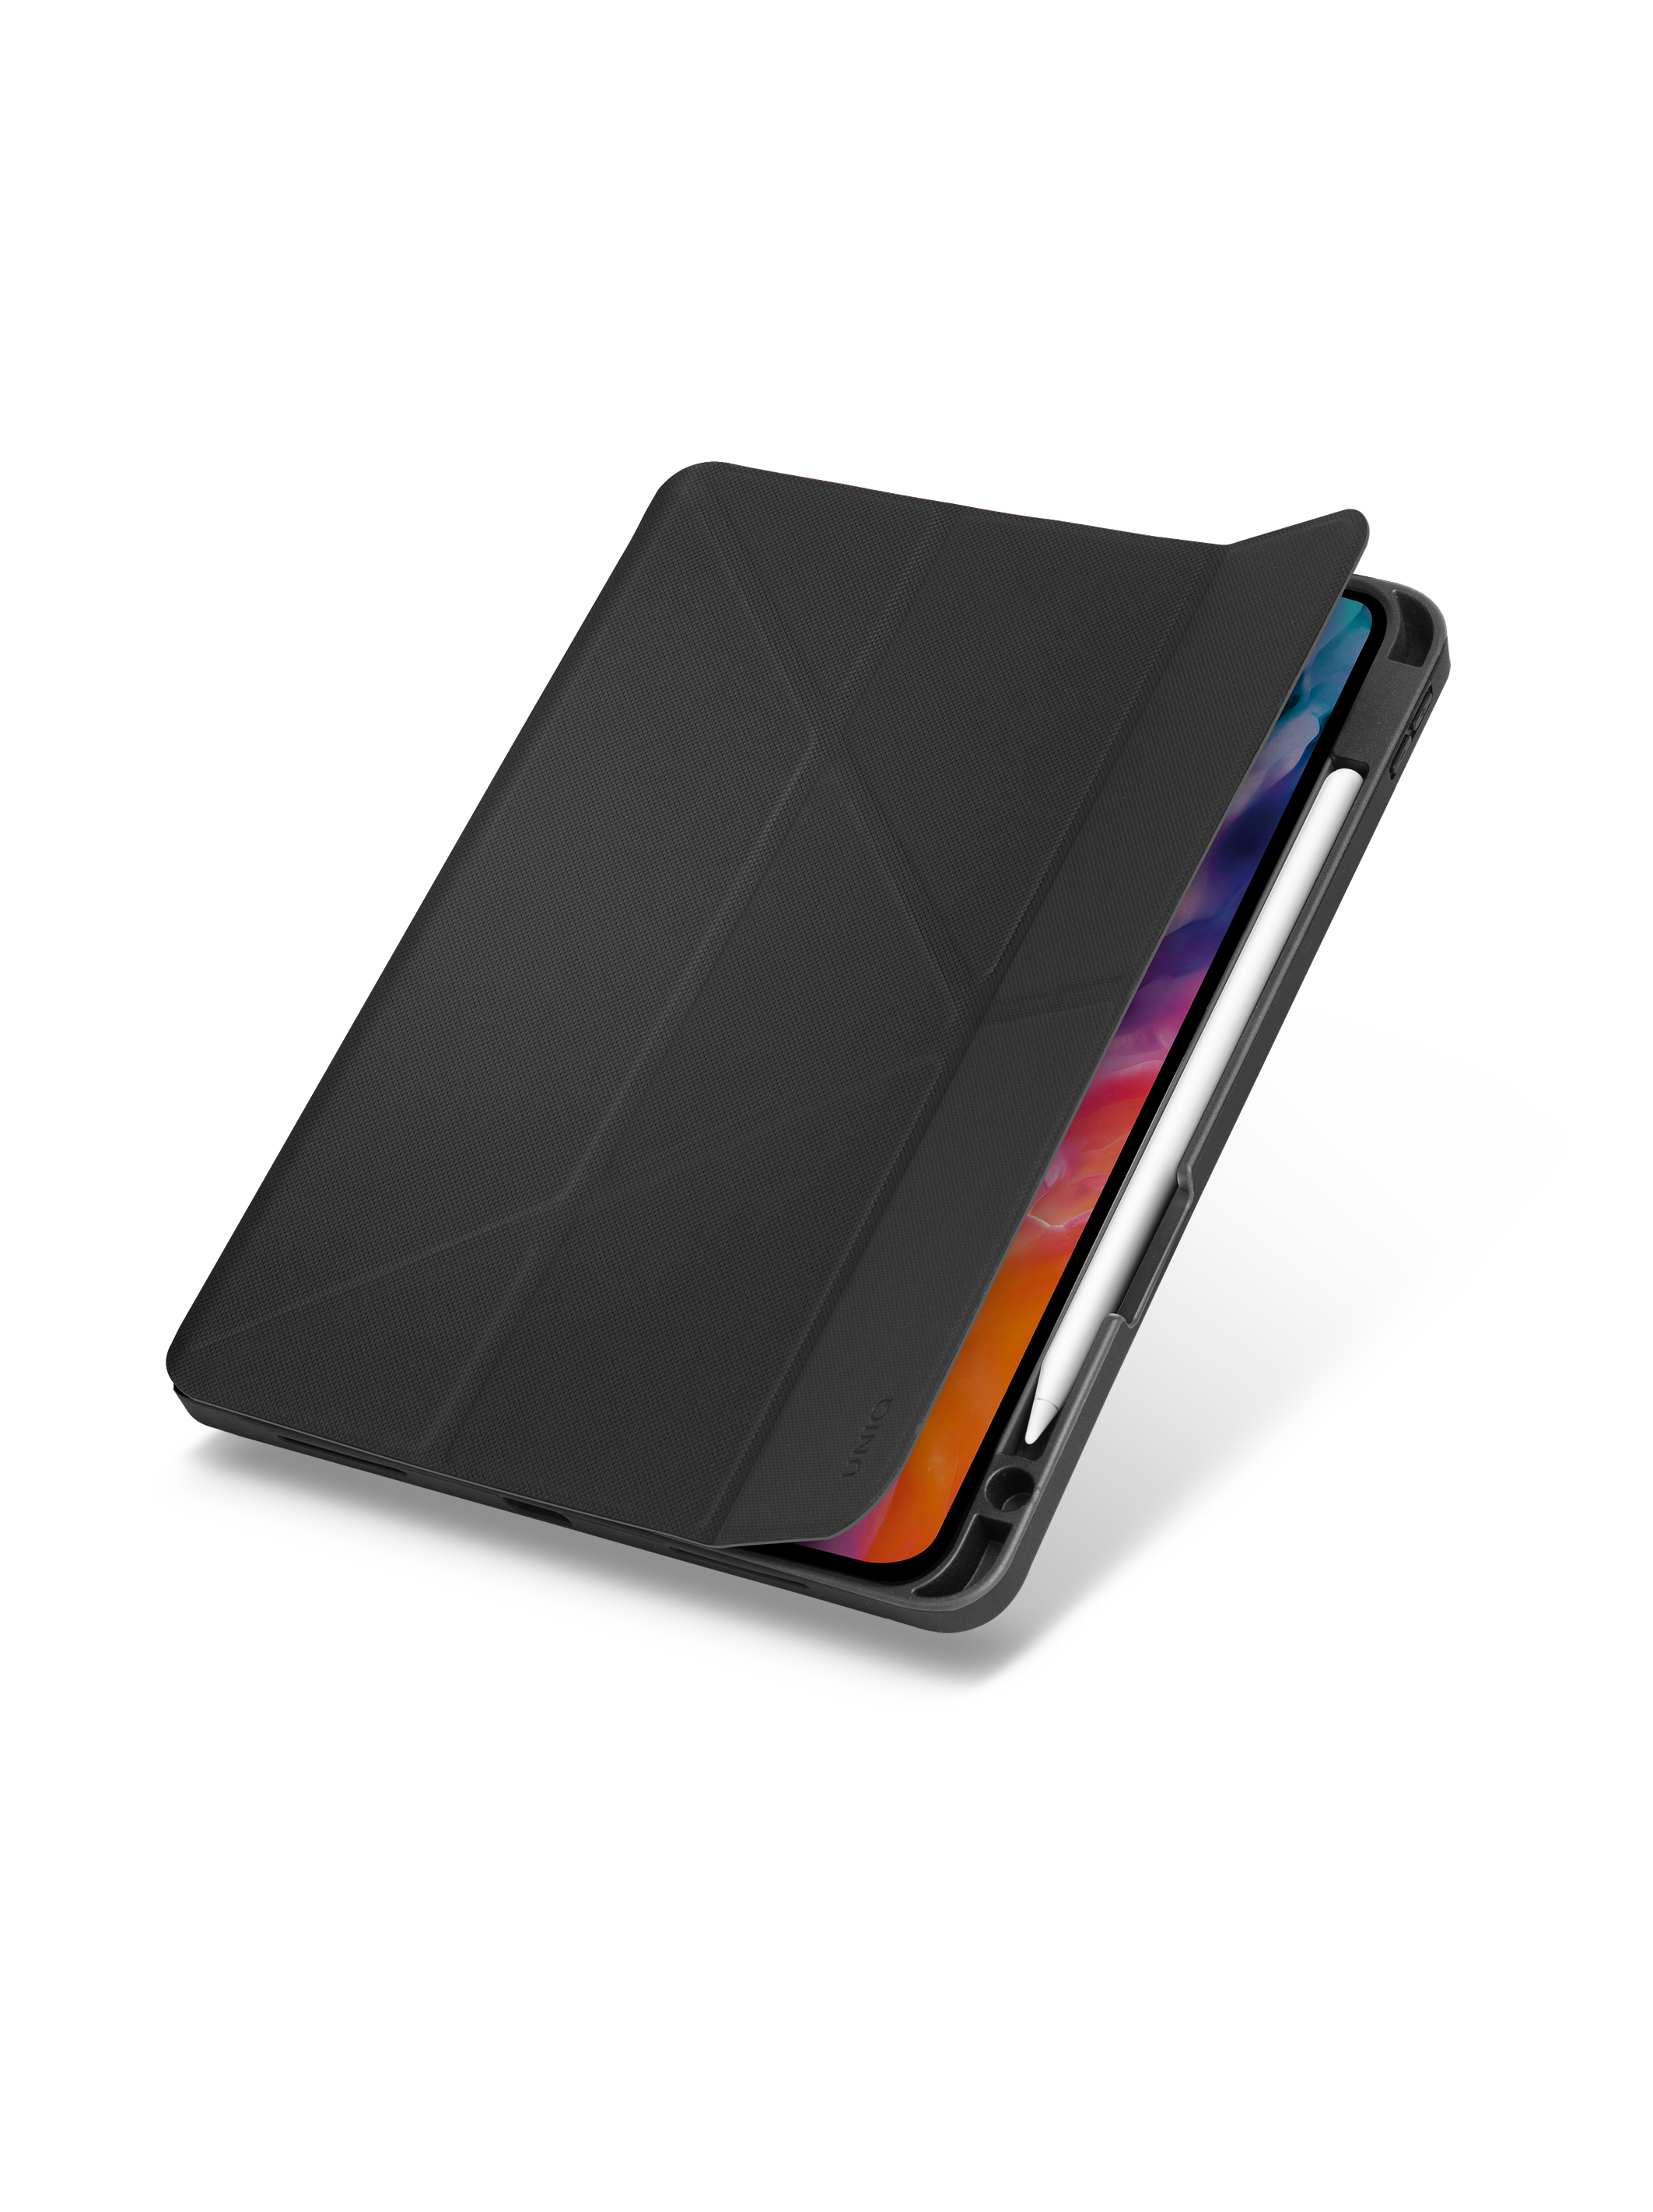 iPad Air 10,9" (2020), case transforma rigor coral, black